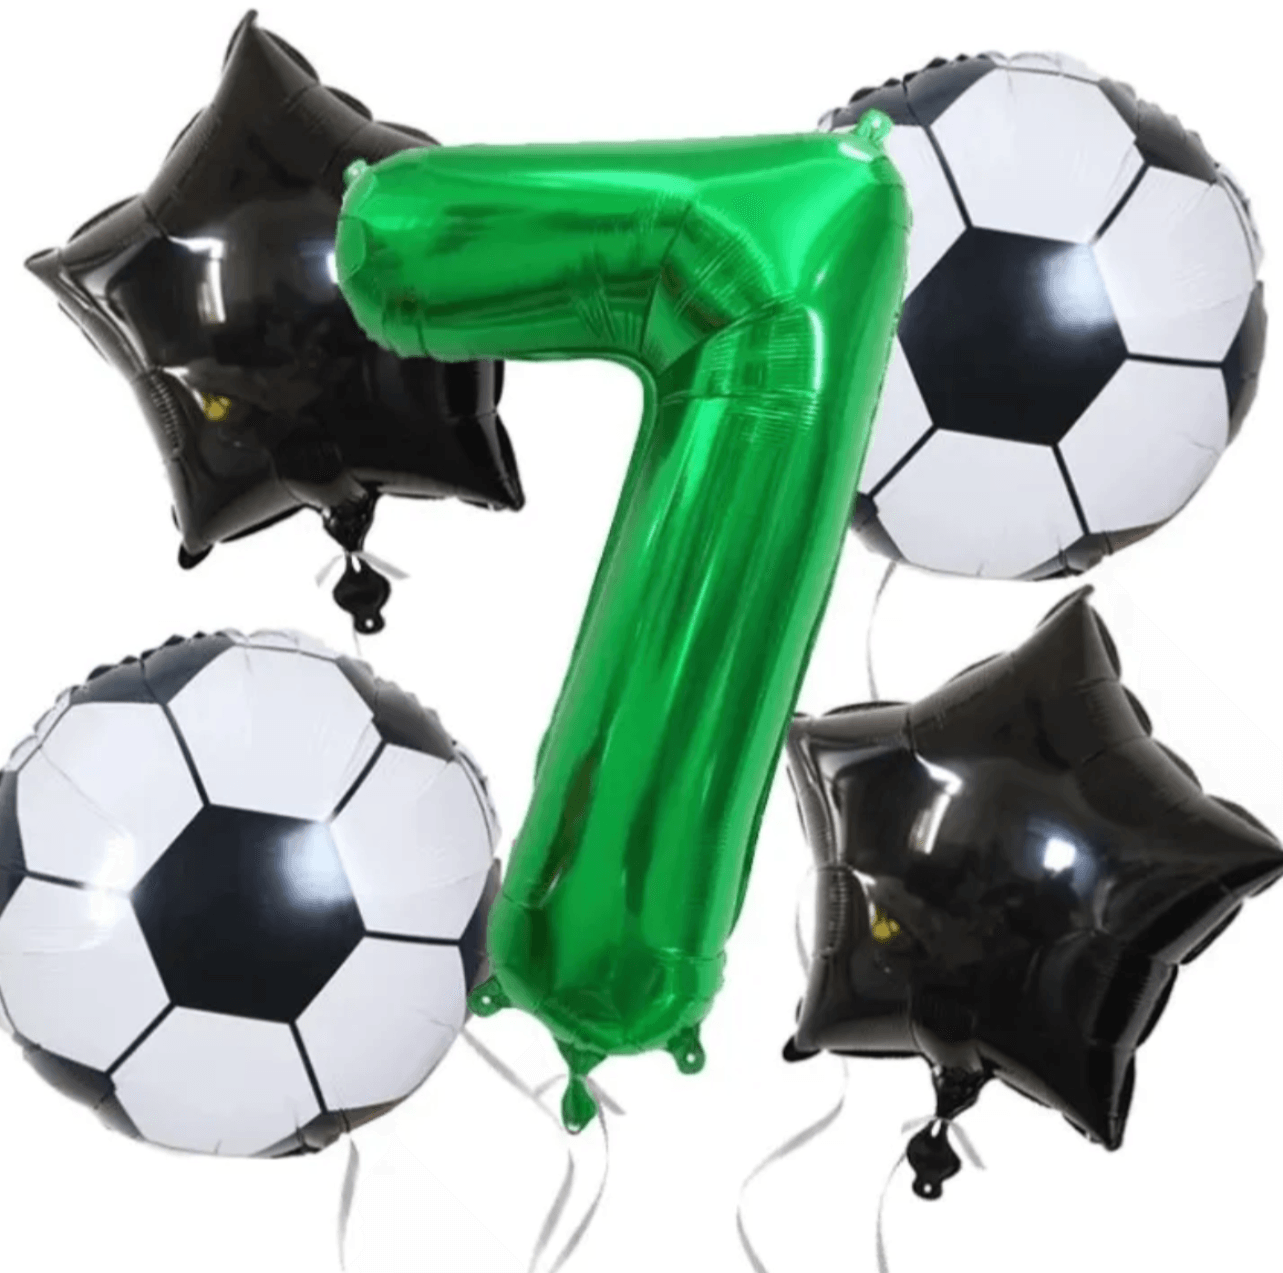 Football Age Balloons - Expat Life Style